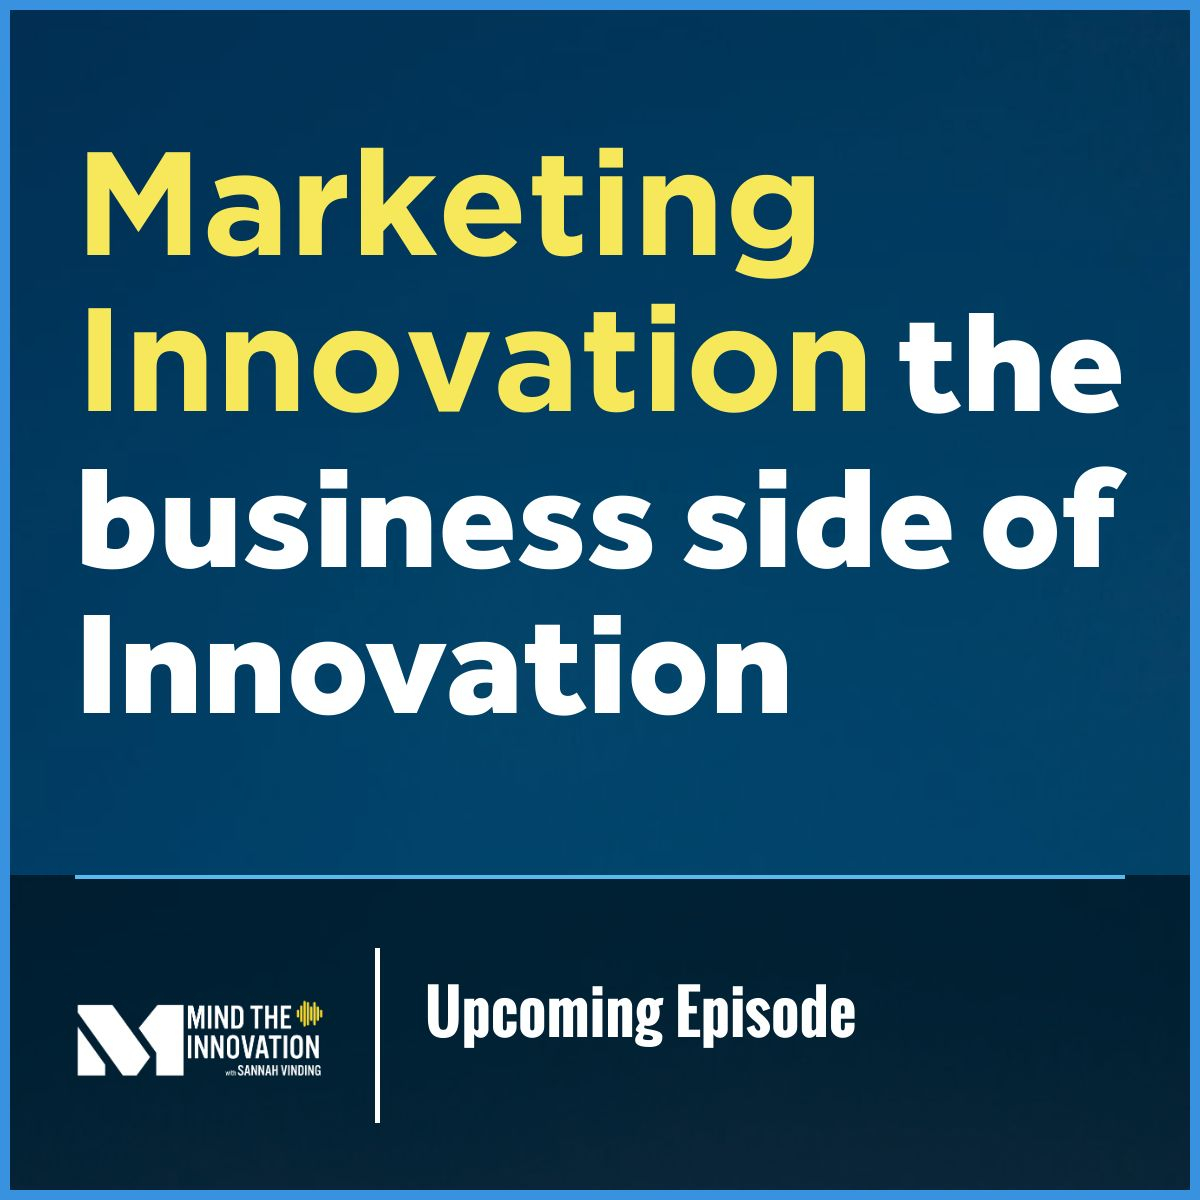 podcast unlock innovation Jeff Hastie Sannah Vinding